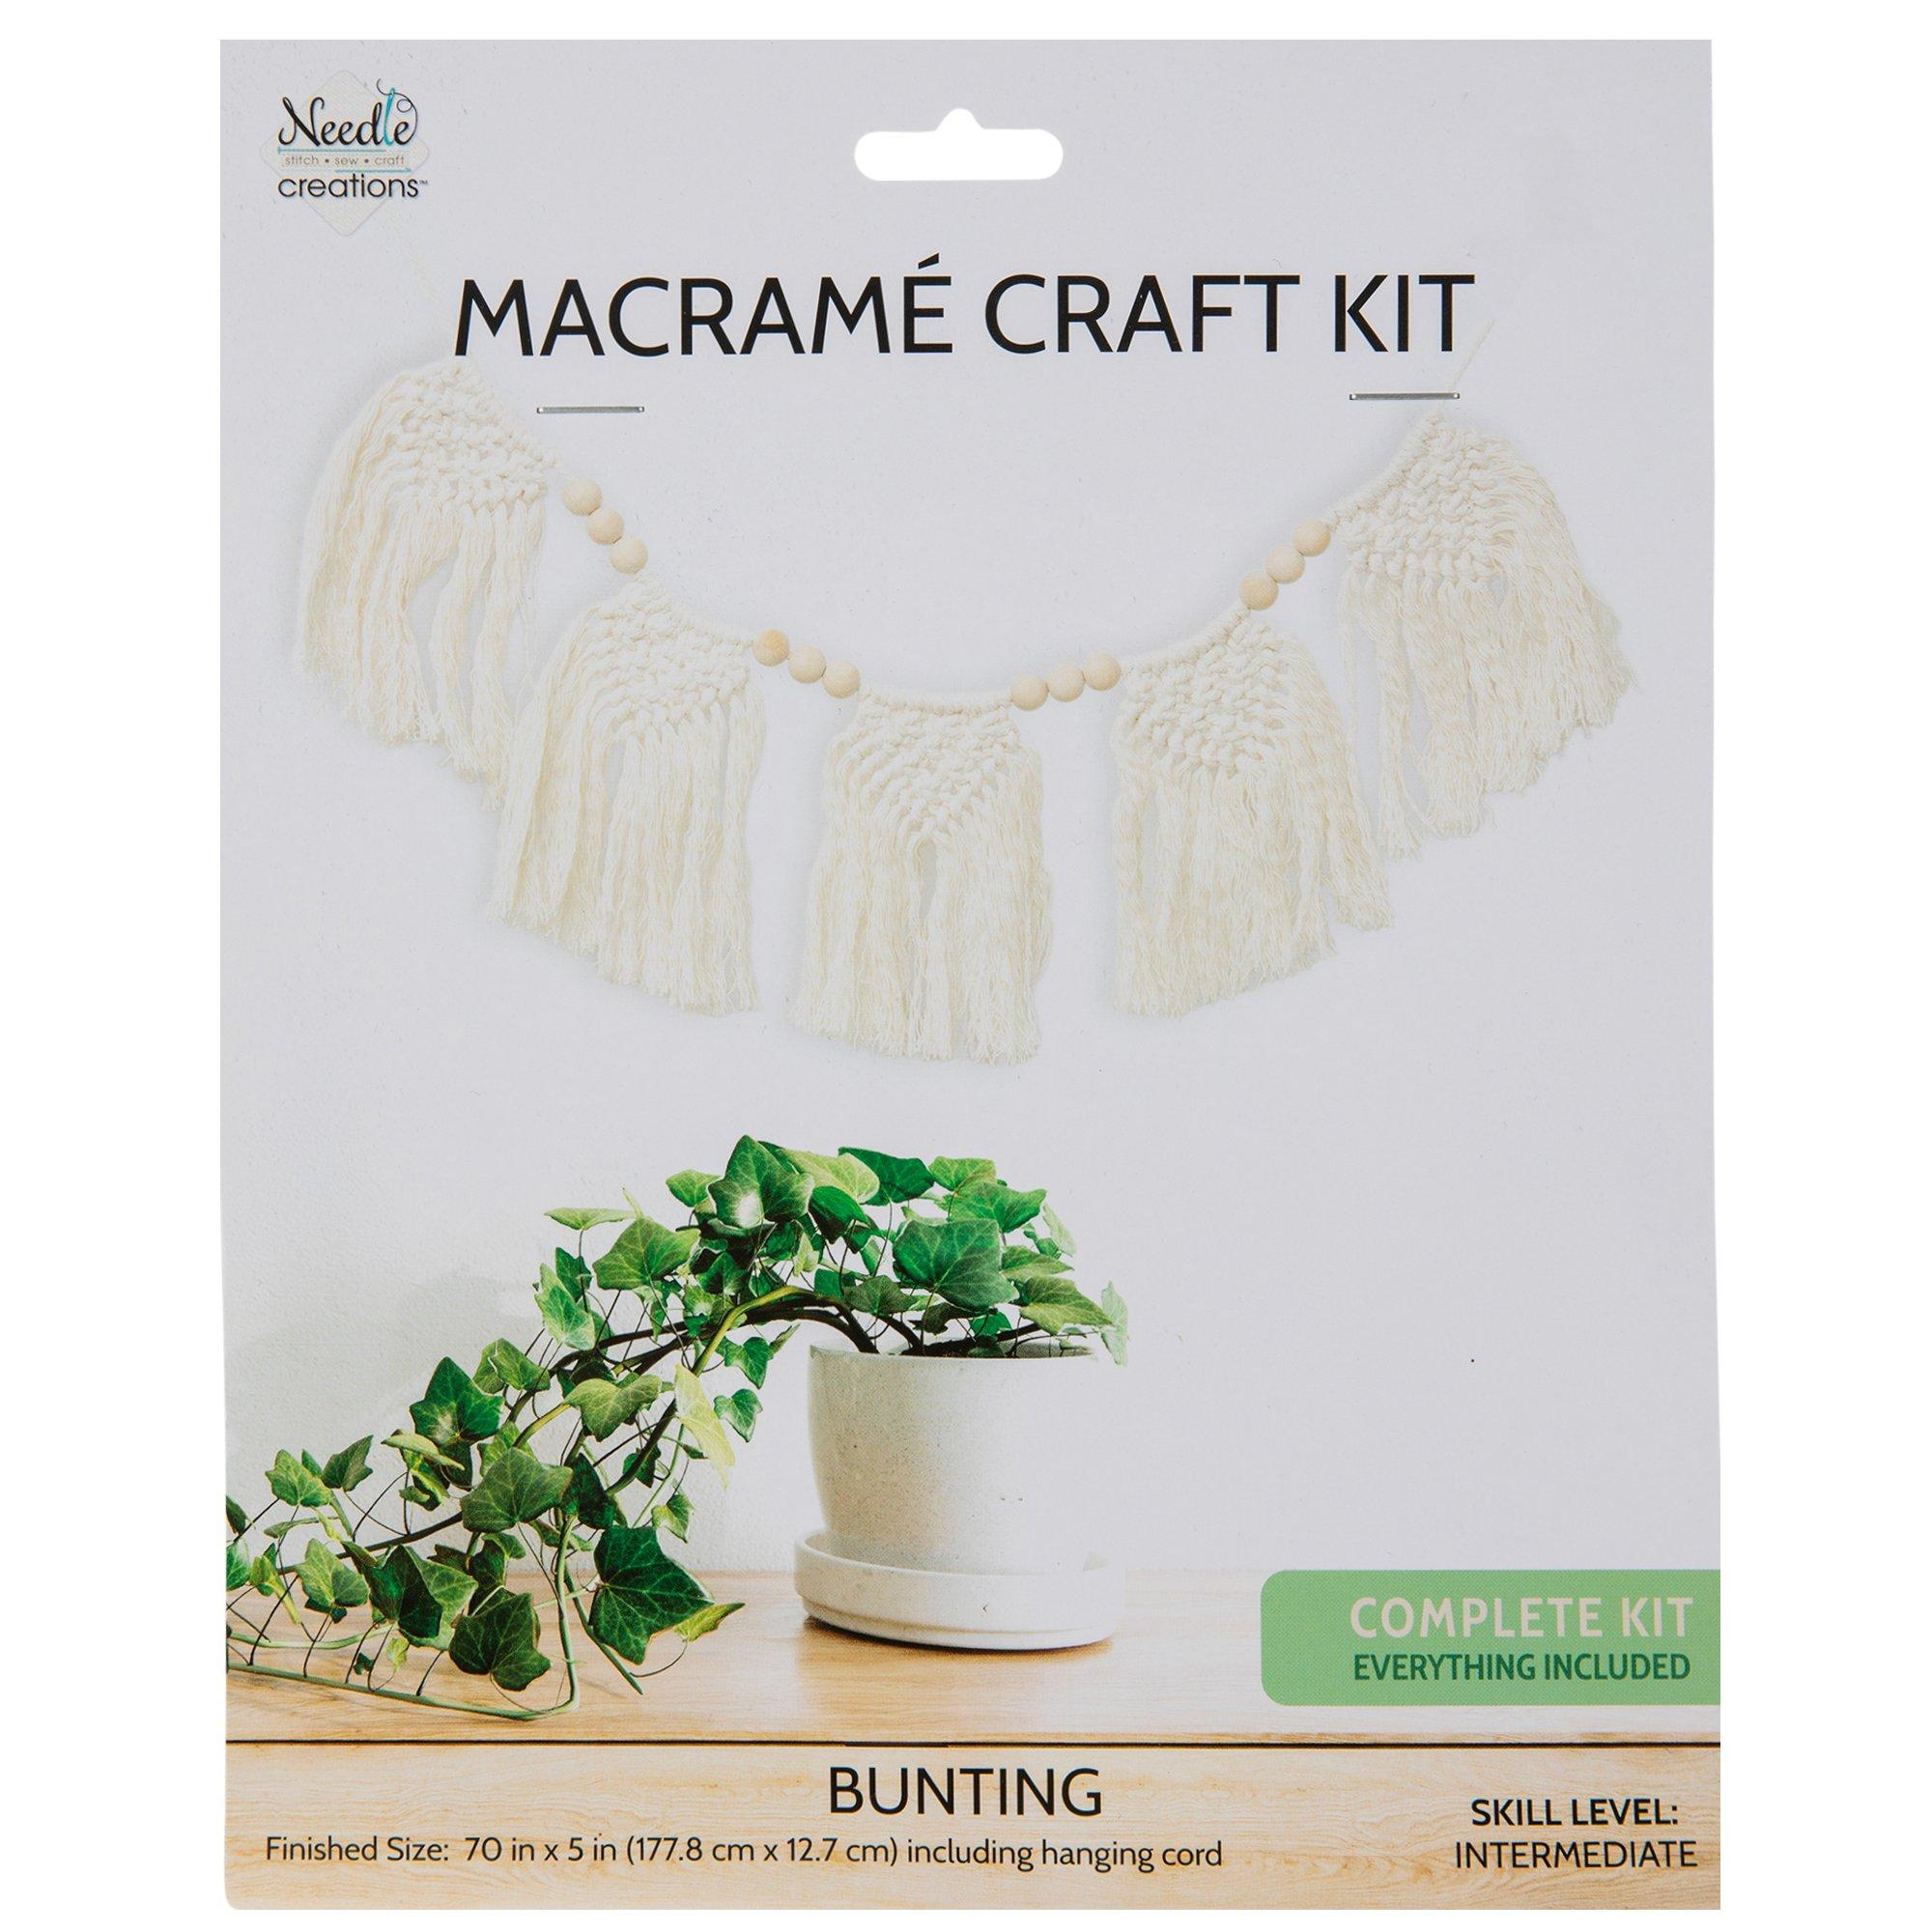 Leisure Arts Macrame Kit Feather, Macrame Kits for Adults